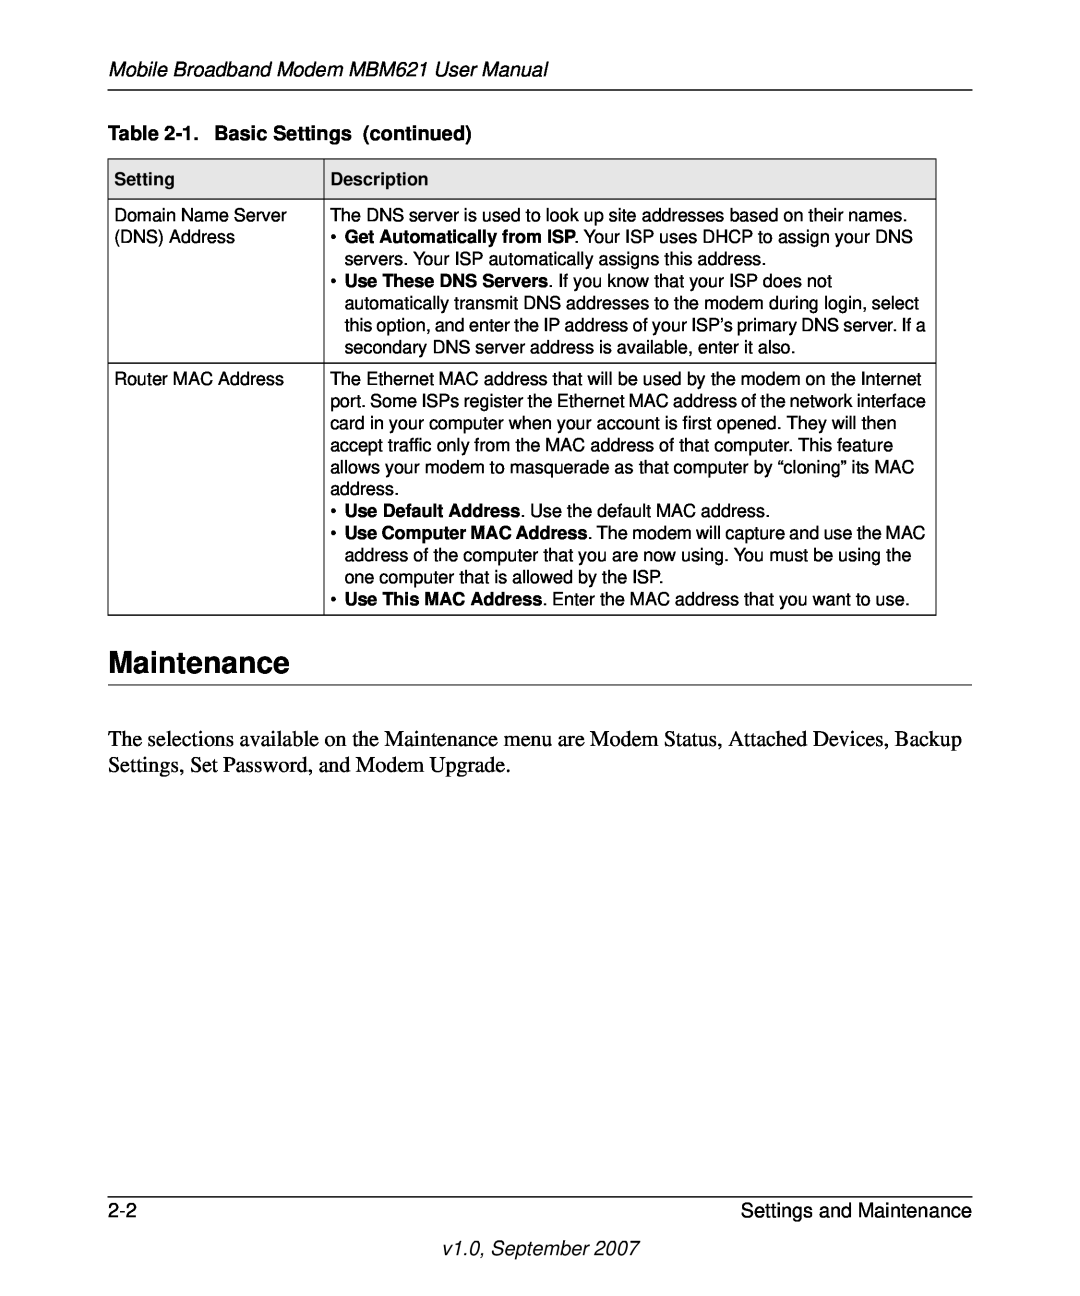 NETGEAR user manual Mobile Broadband Modem MBM621 User Manual, 1. Basic Settings continued, Settings and Maintenance 